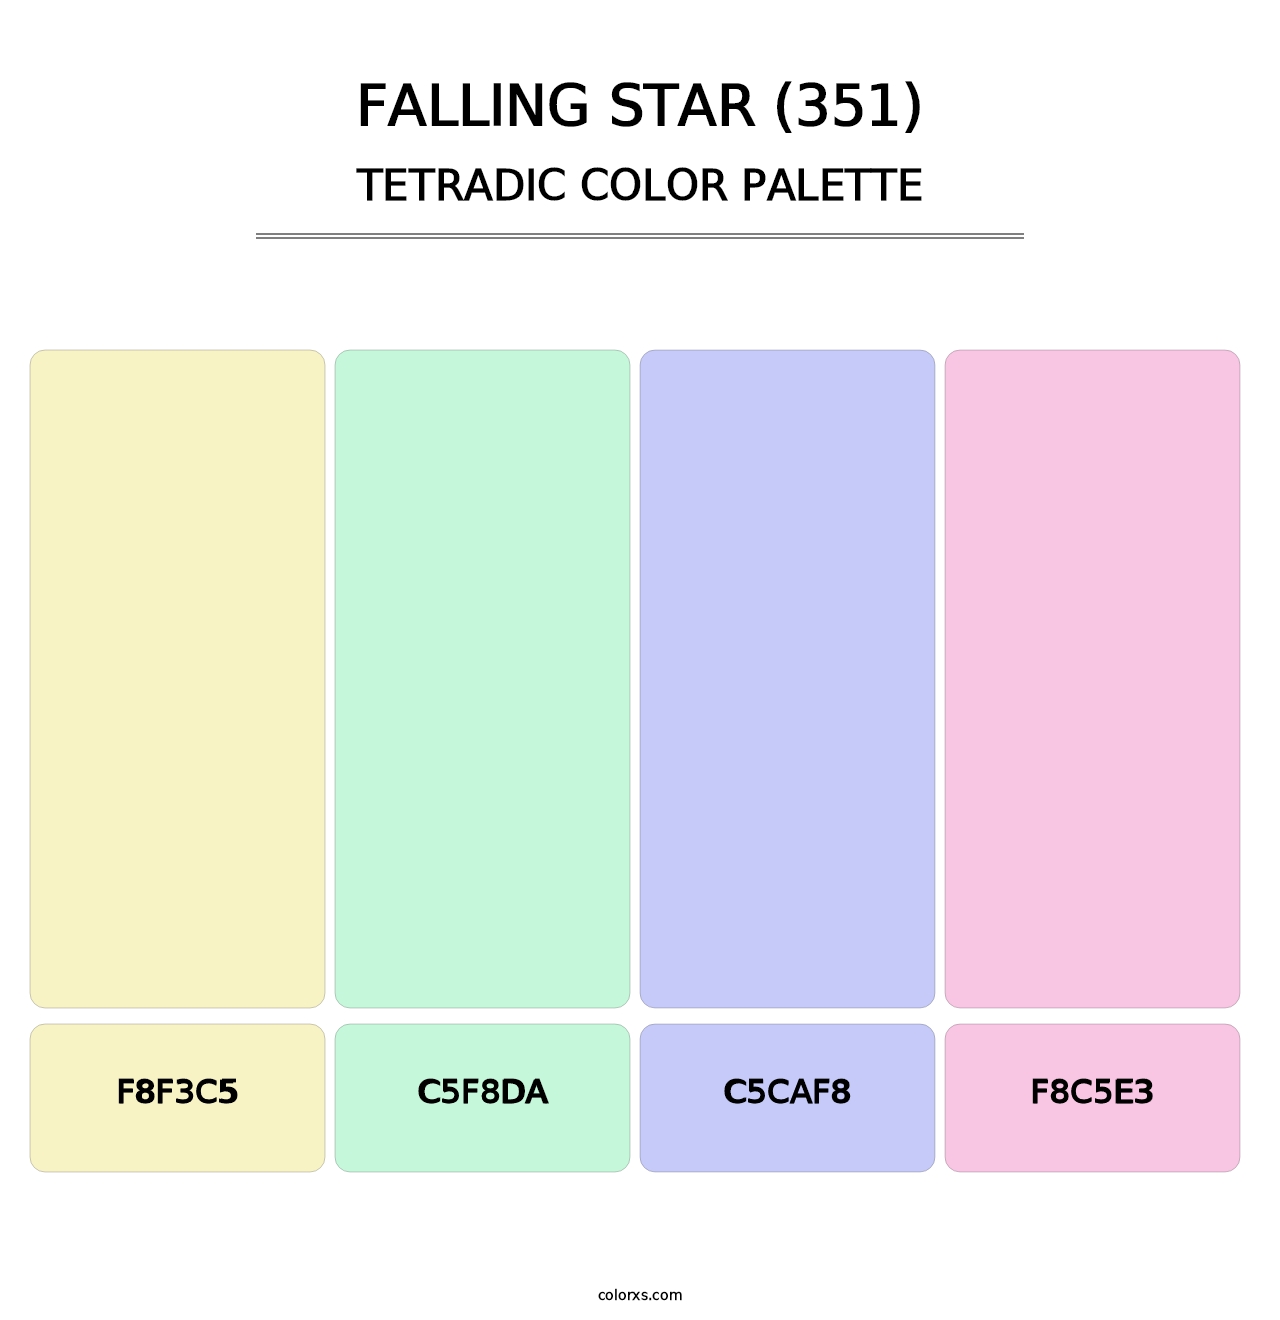 Falling Star (351) - Tetradic Color Palette